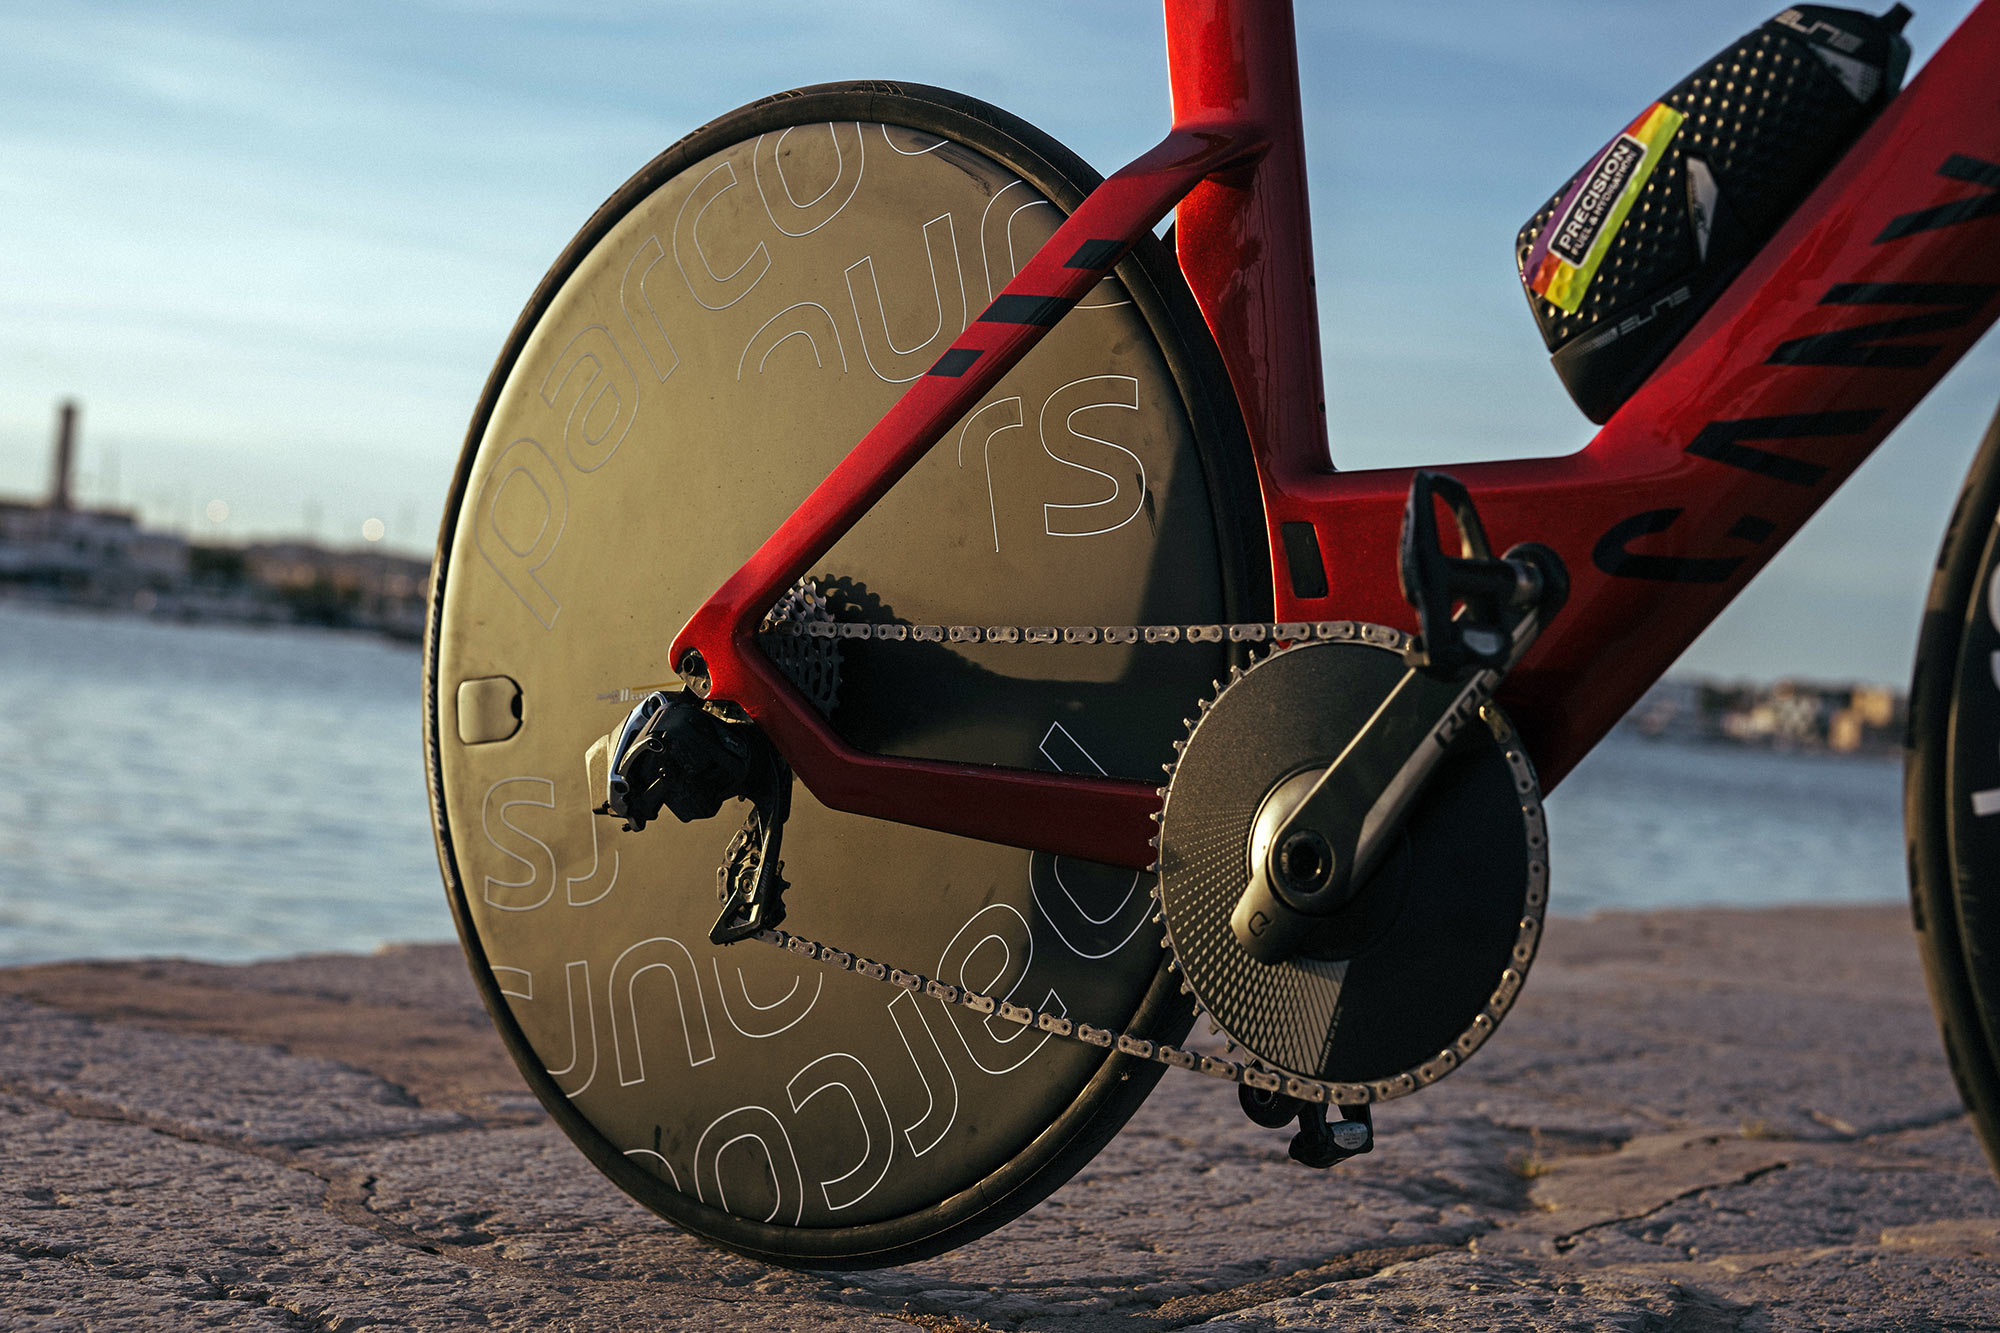 Classified x Parcours Disc2 TT/Tri wheel, Powershift-ready internal 2-sp geared hub in carbon disc time trial & triathlon racing wheel